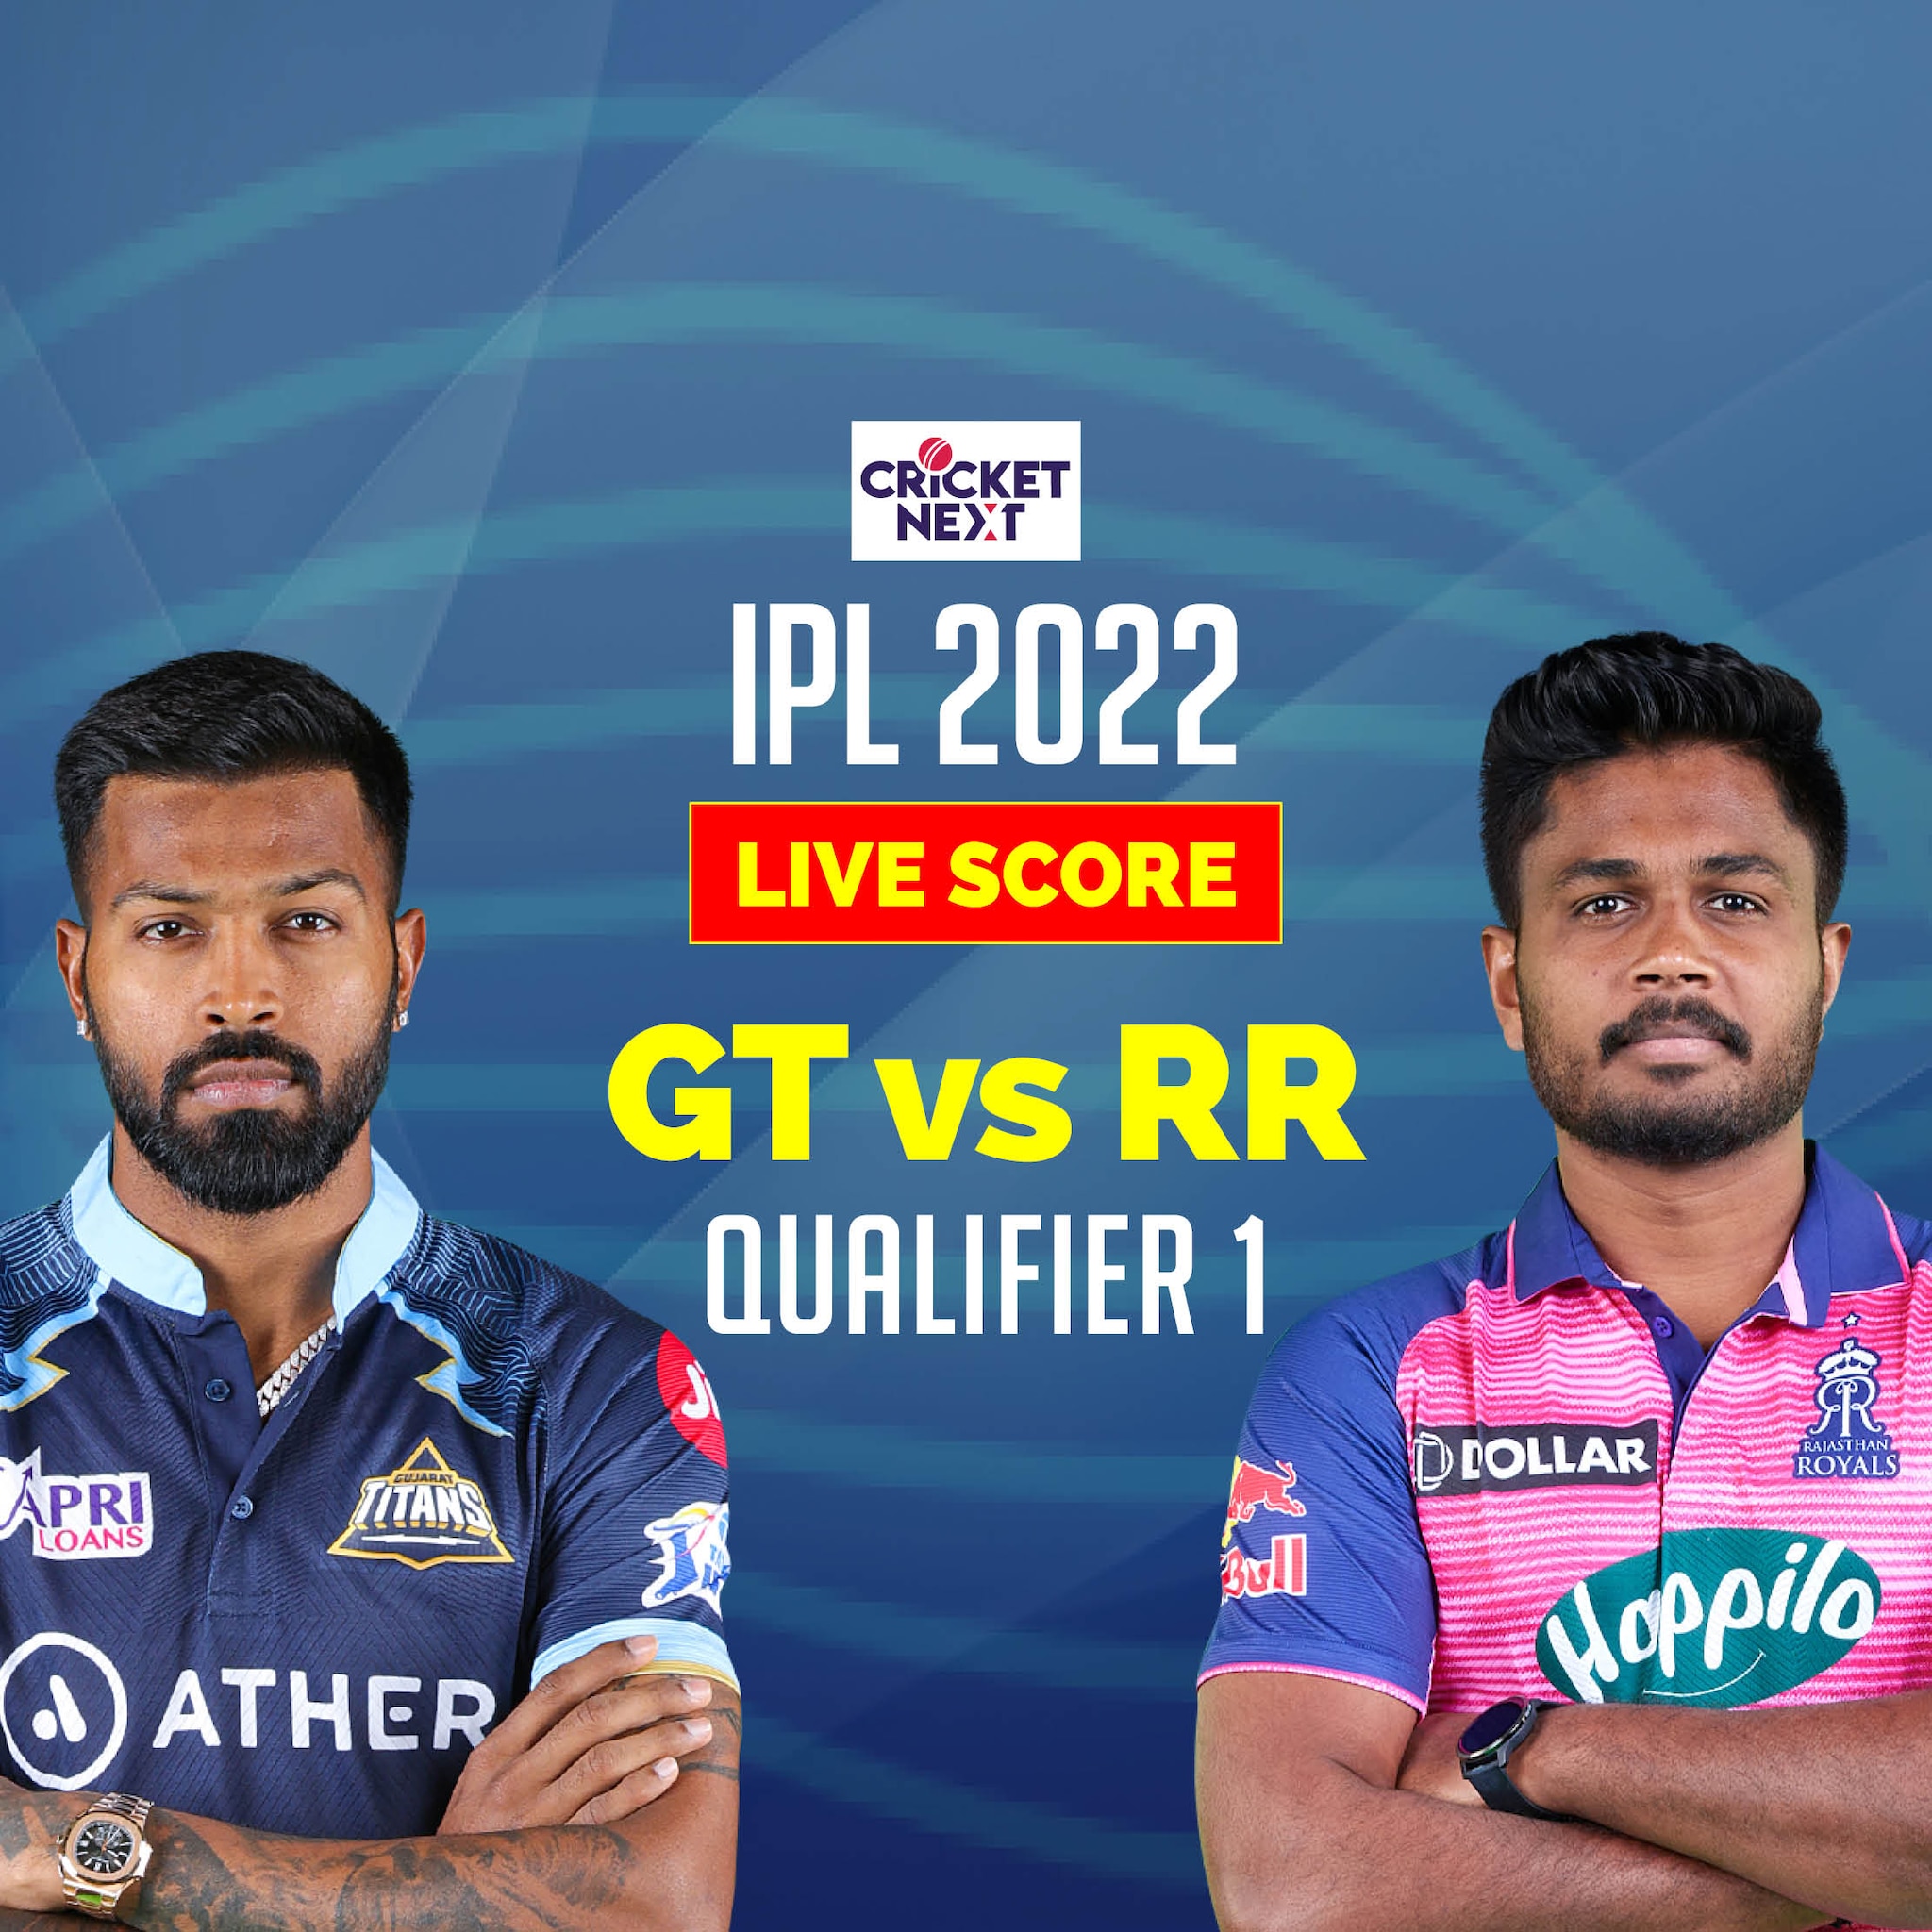 GT vs RR Highlights IPL 2022 Qualifier 1 Miller, Pandya Star as Gujarat Titans Beat Rajasthan Royals to Enter Final